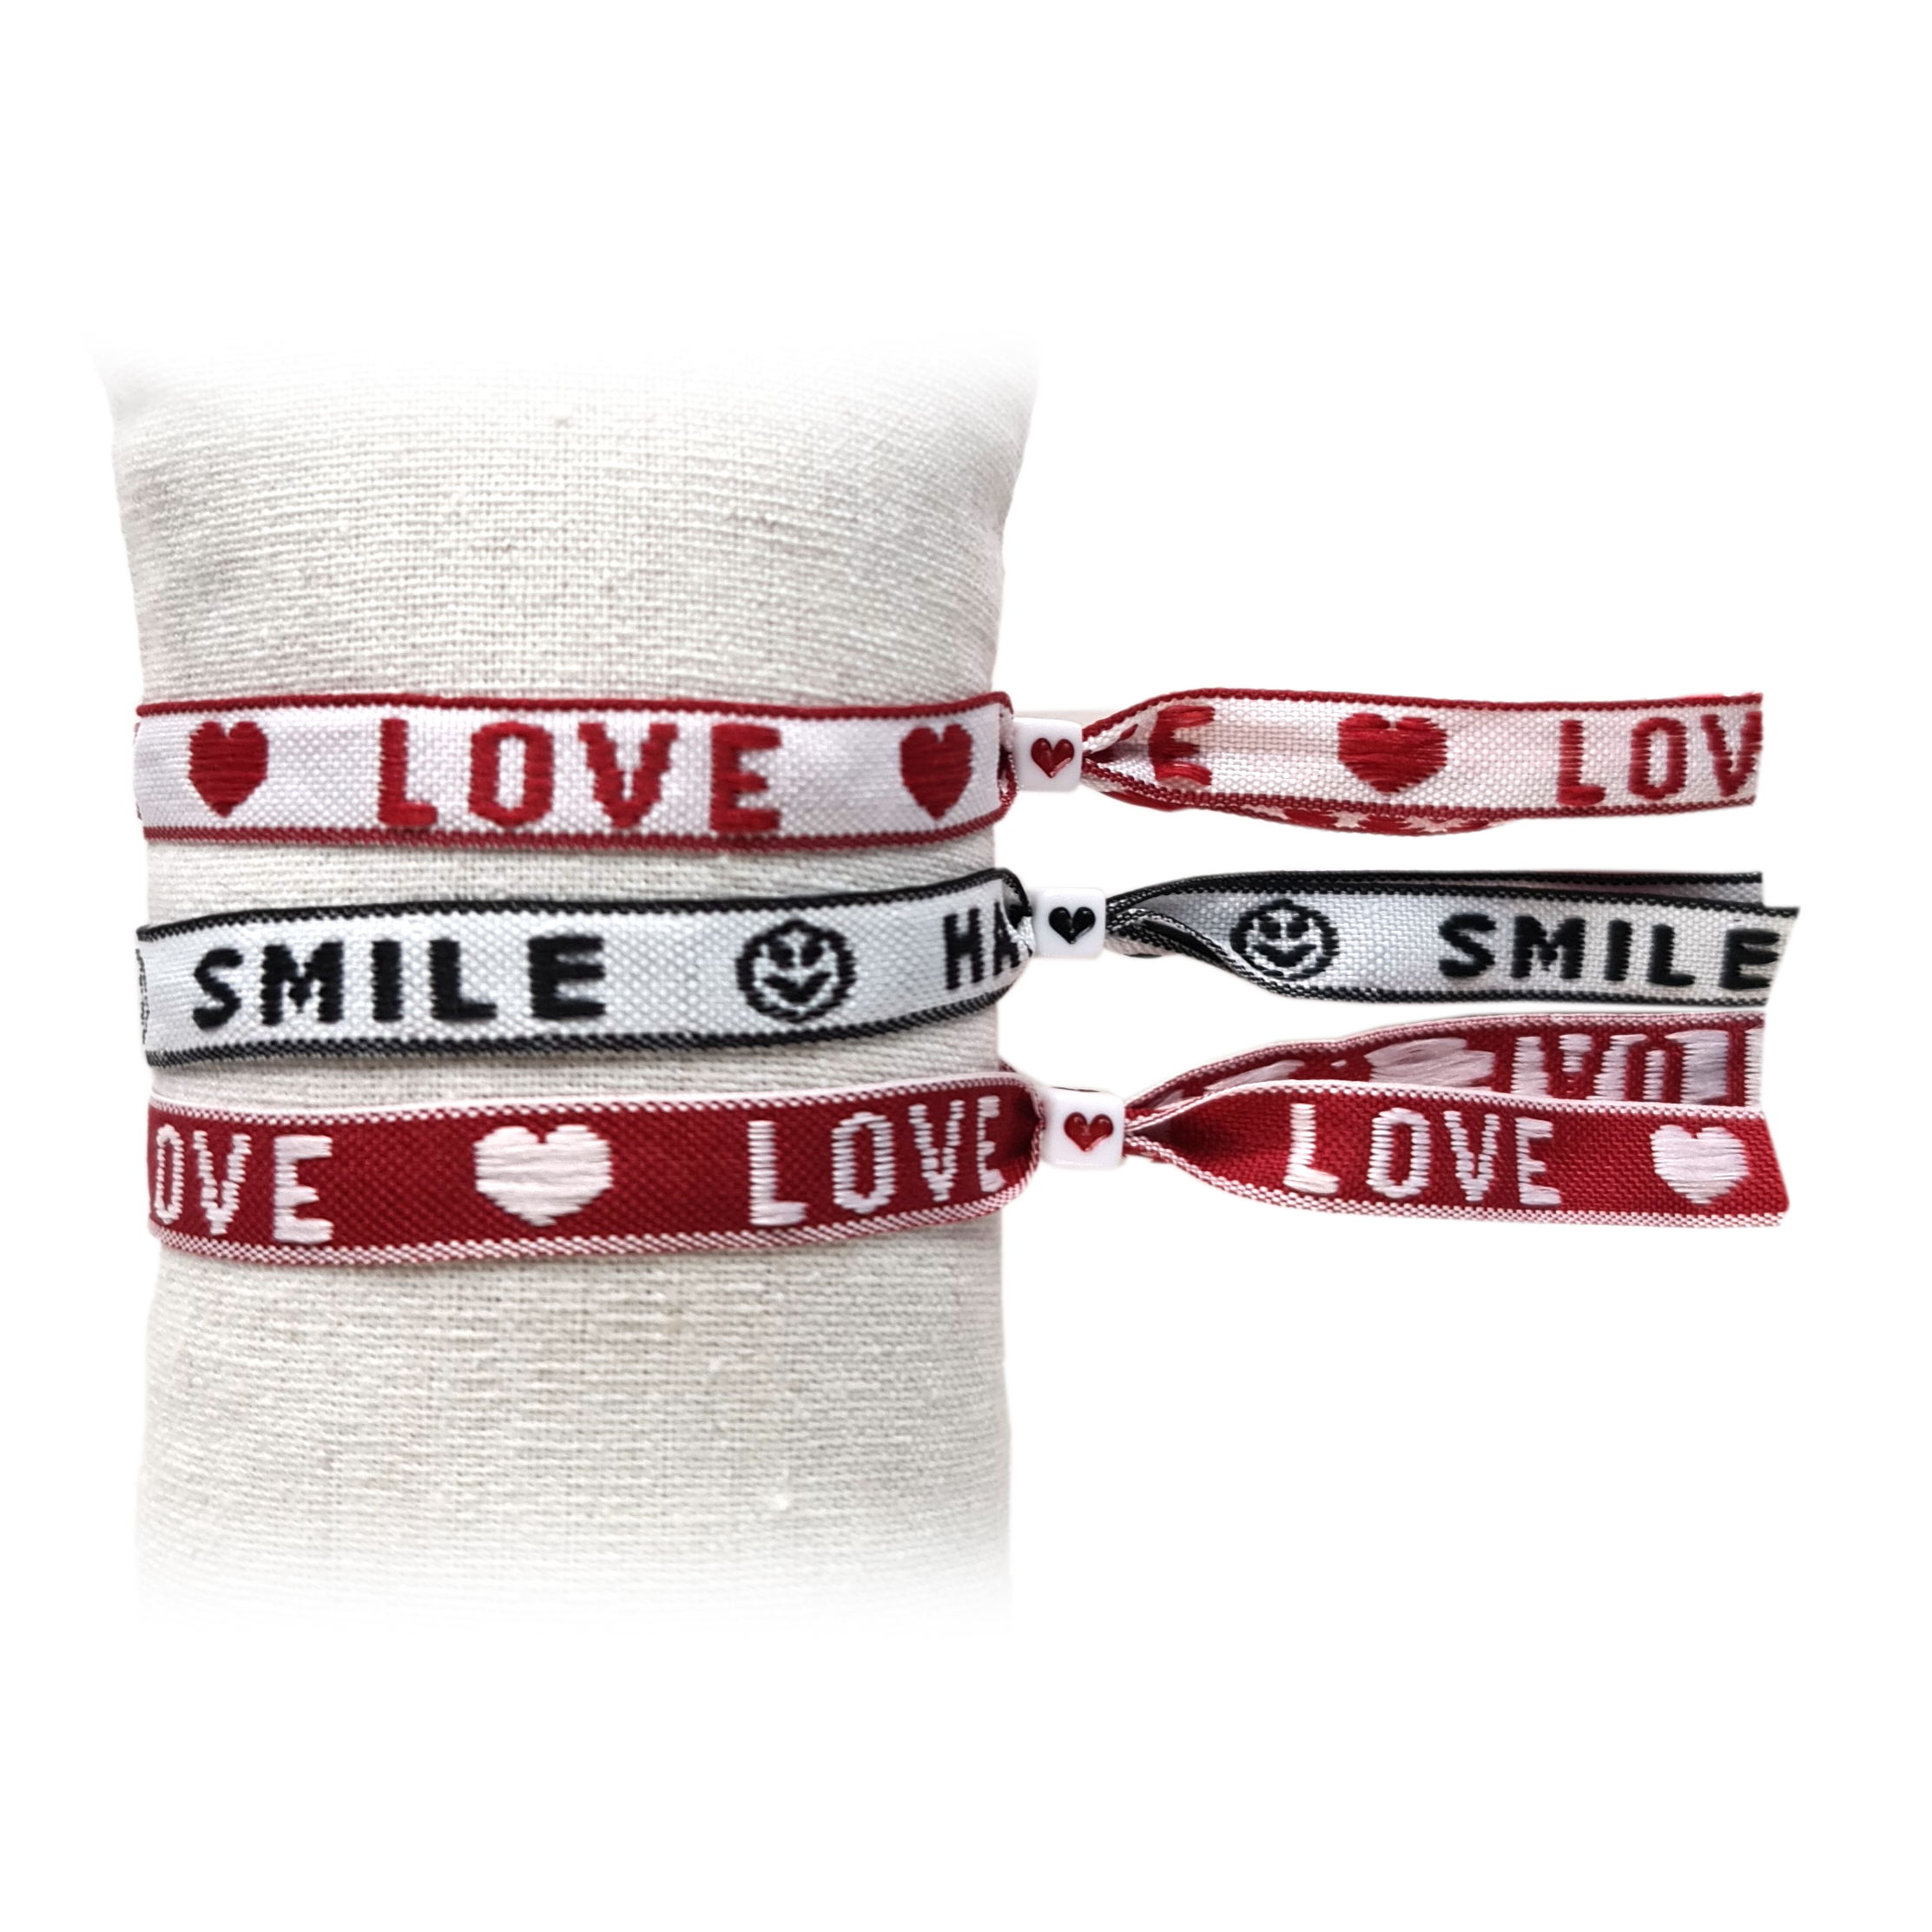 Principessa set van 3 trendy Festival lint armbandjes met tekstlint – Tekst: Love, Happy smile, Love – Kleur: Wit, Rood, Zwart